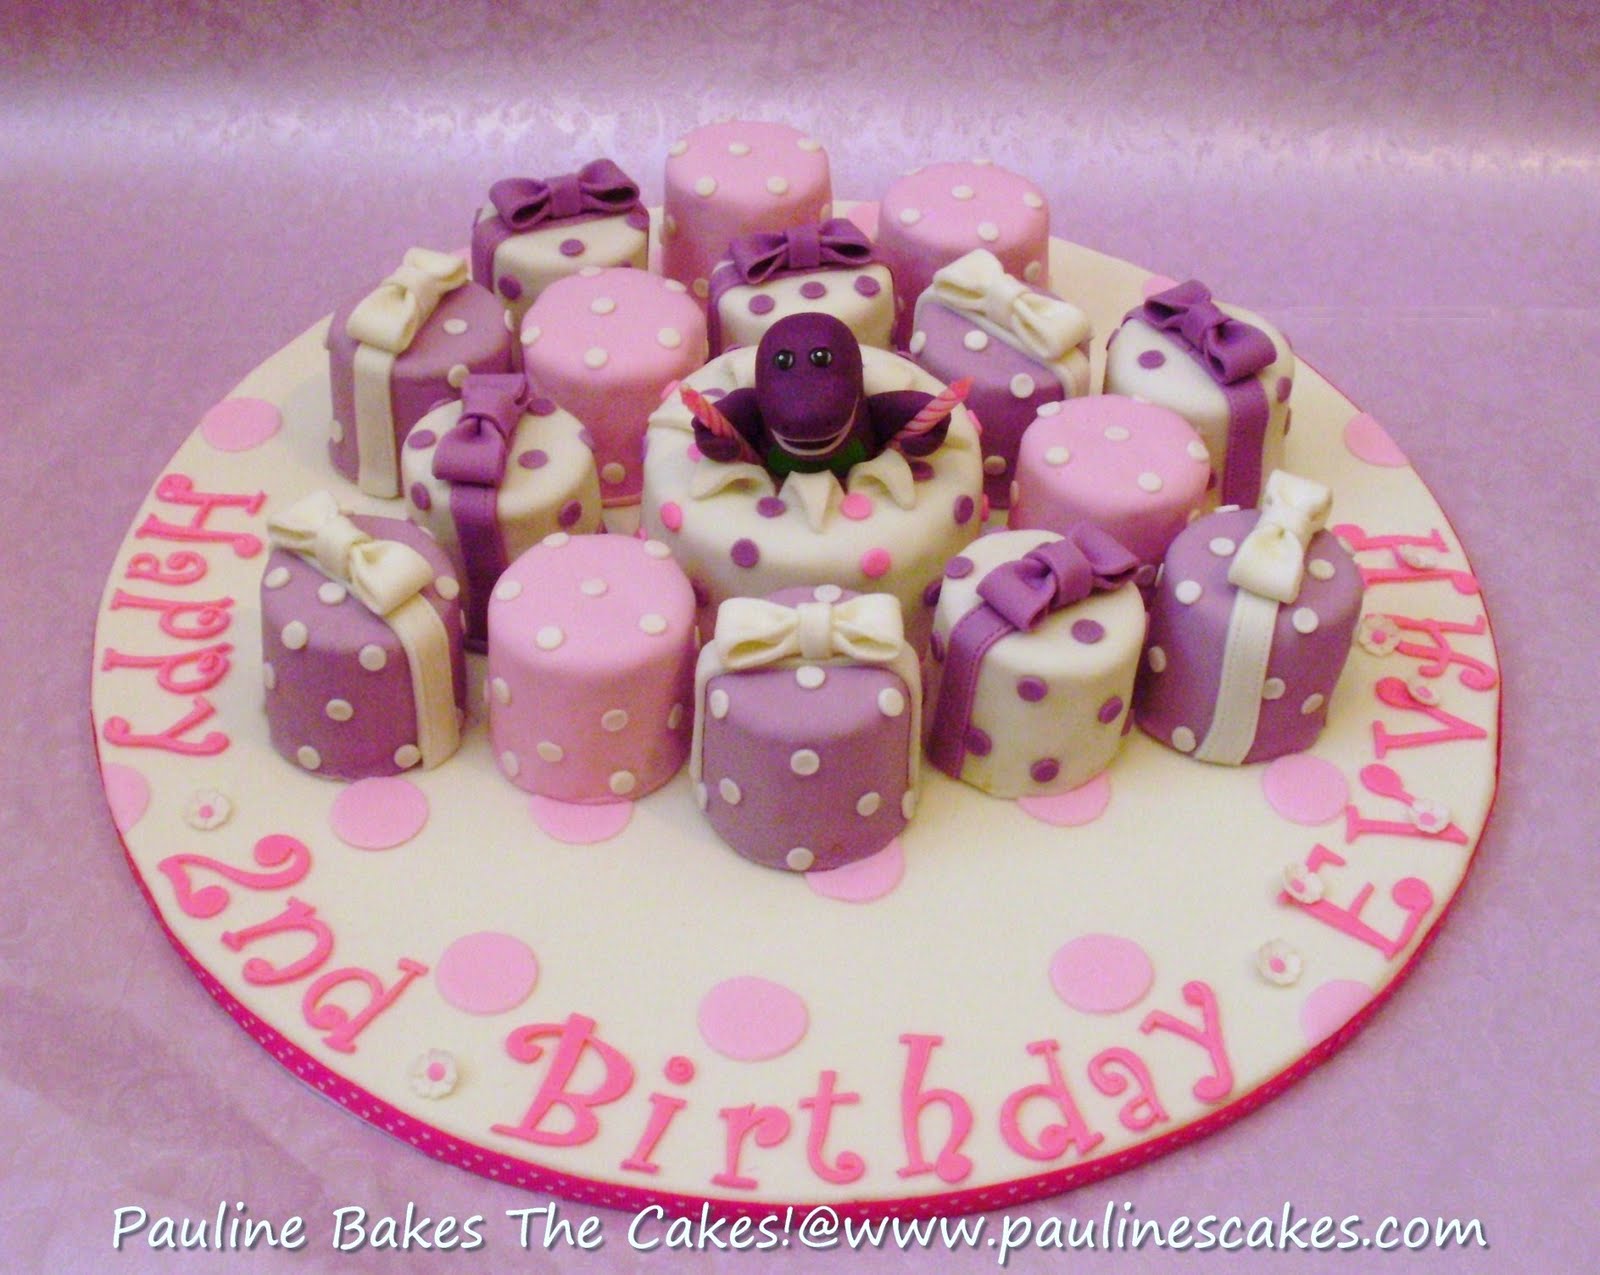 mini cakes wedding